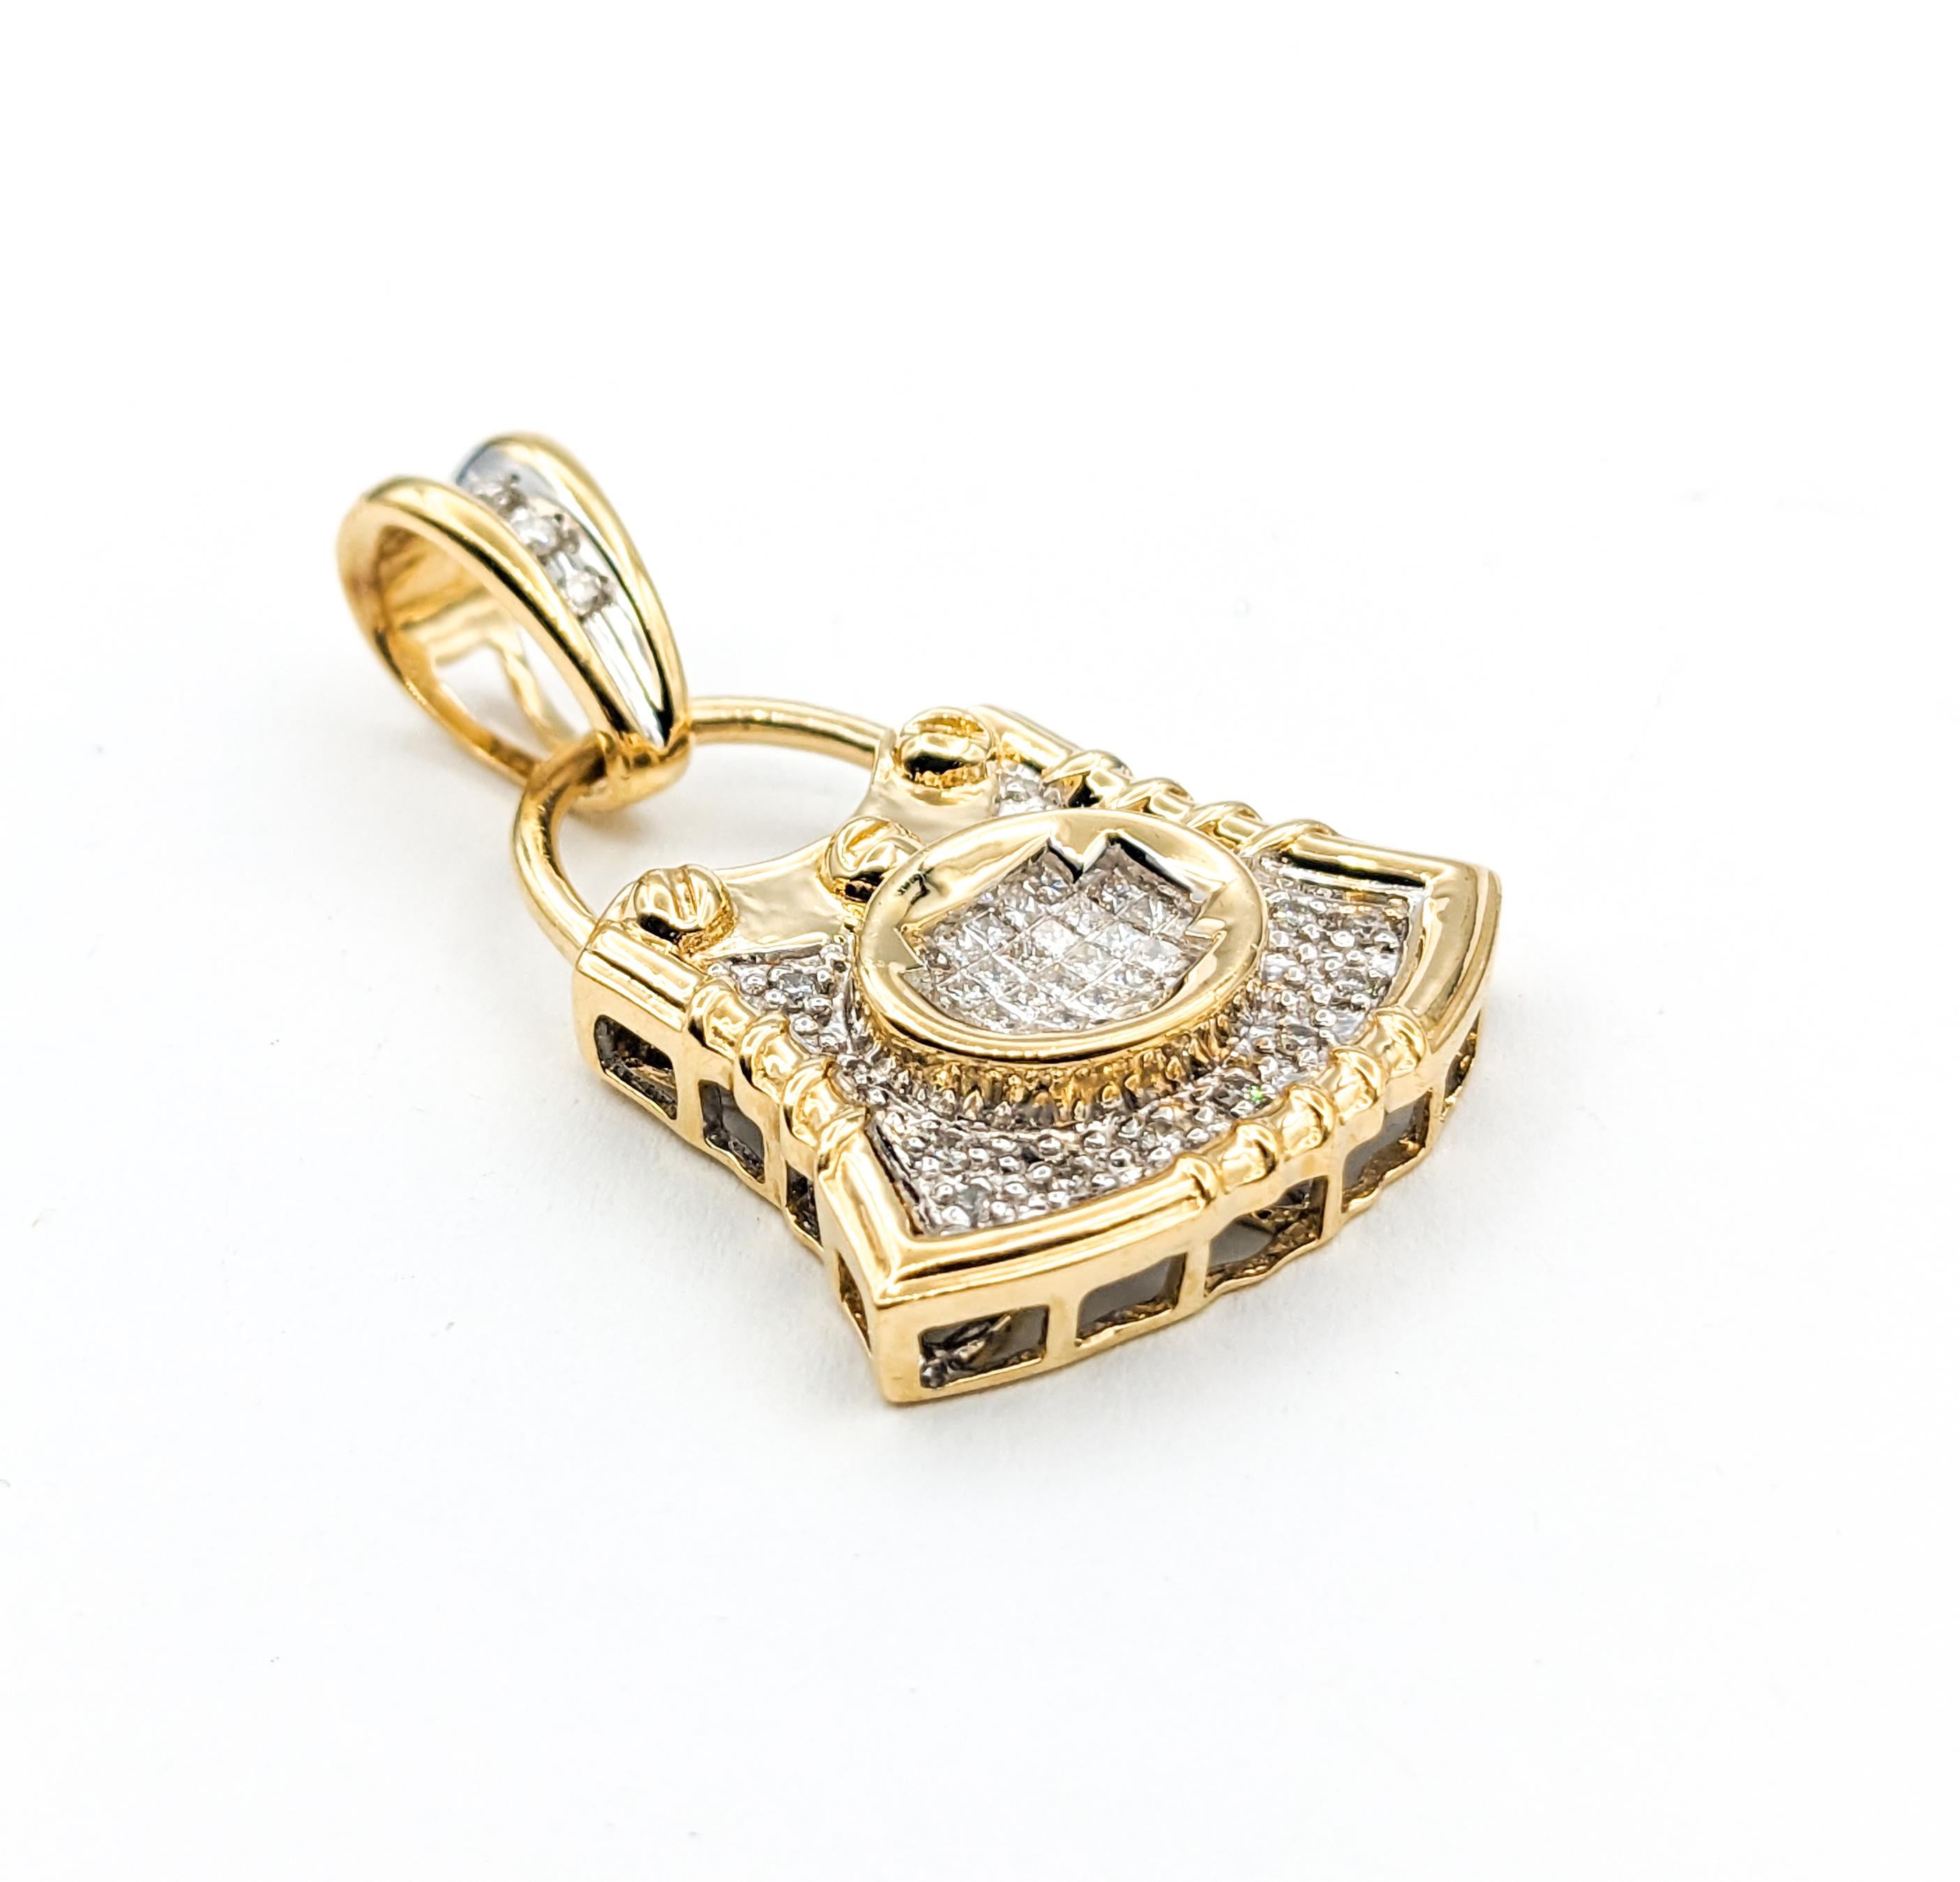 Contemporary Ornate Diamond Purse Pendant Charm in Yellow Gold